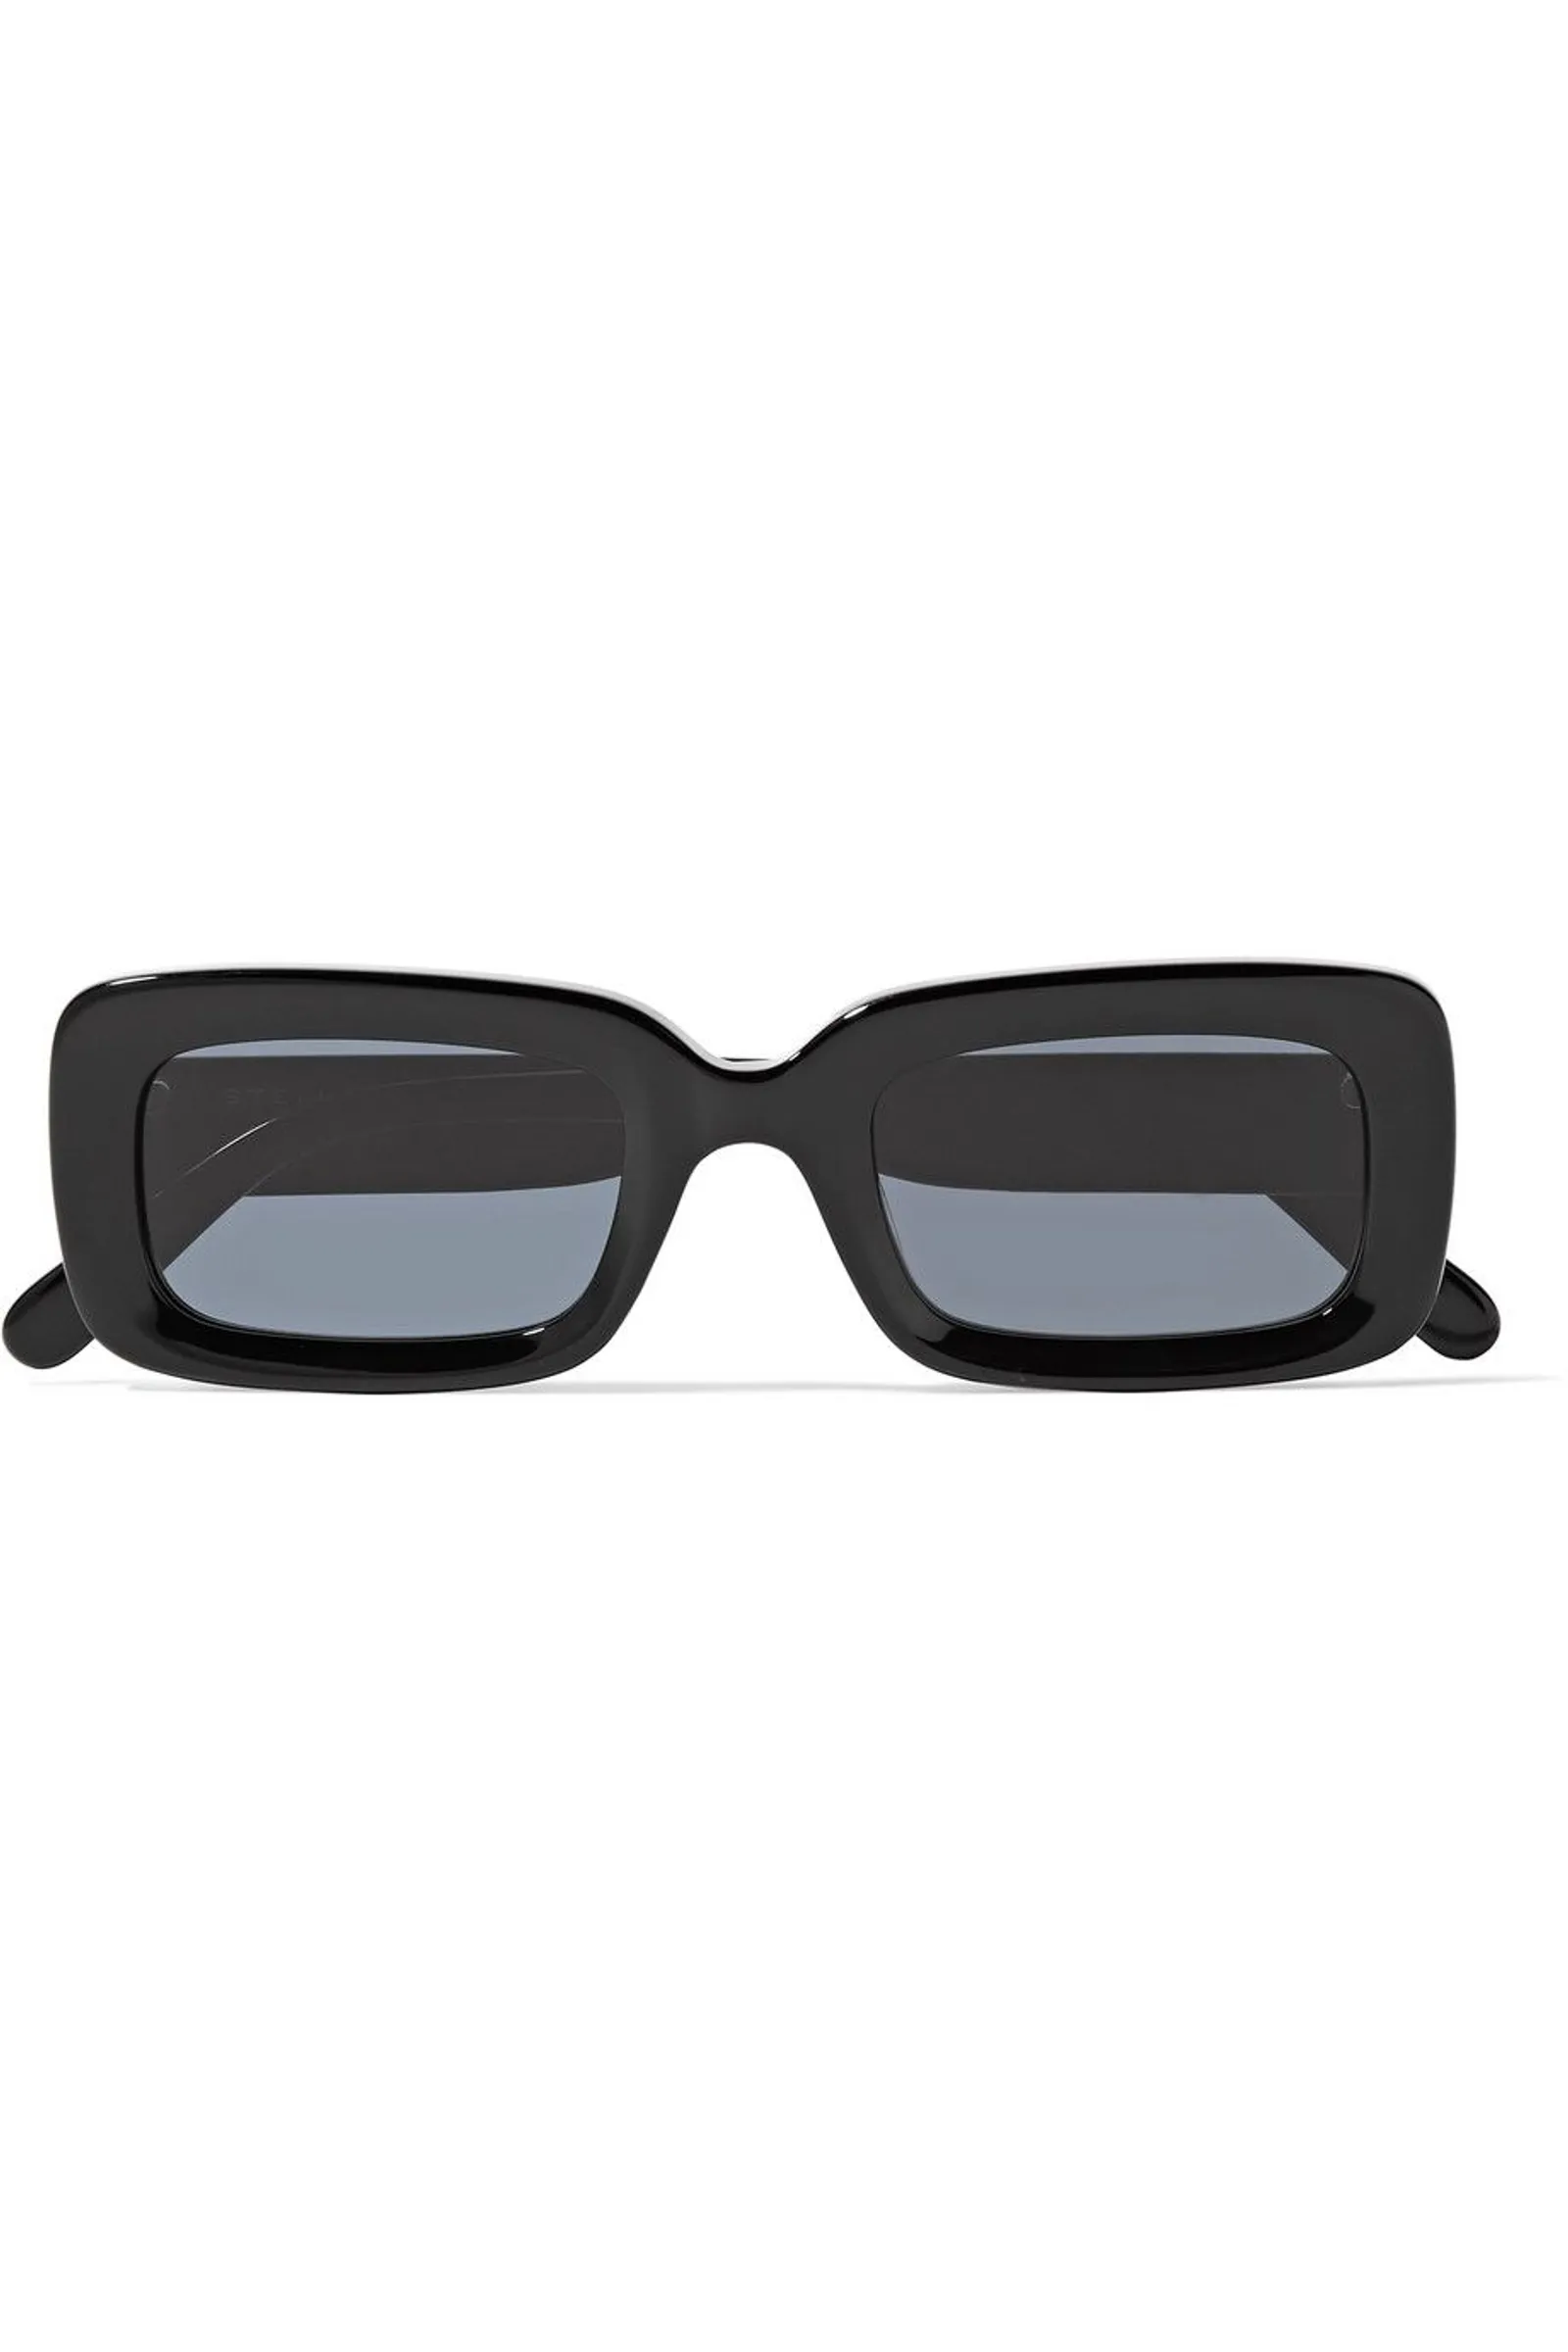 #PopbelaOOTD: Kacamata Hitam Model Kotak yang Trending